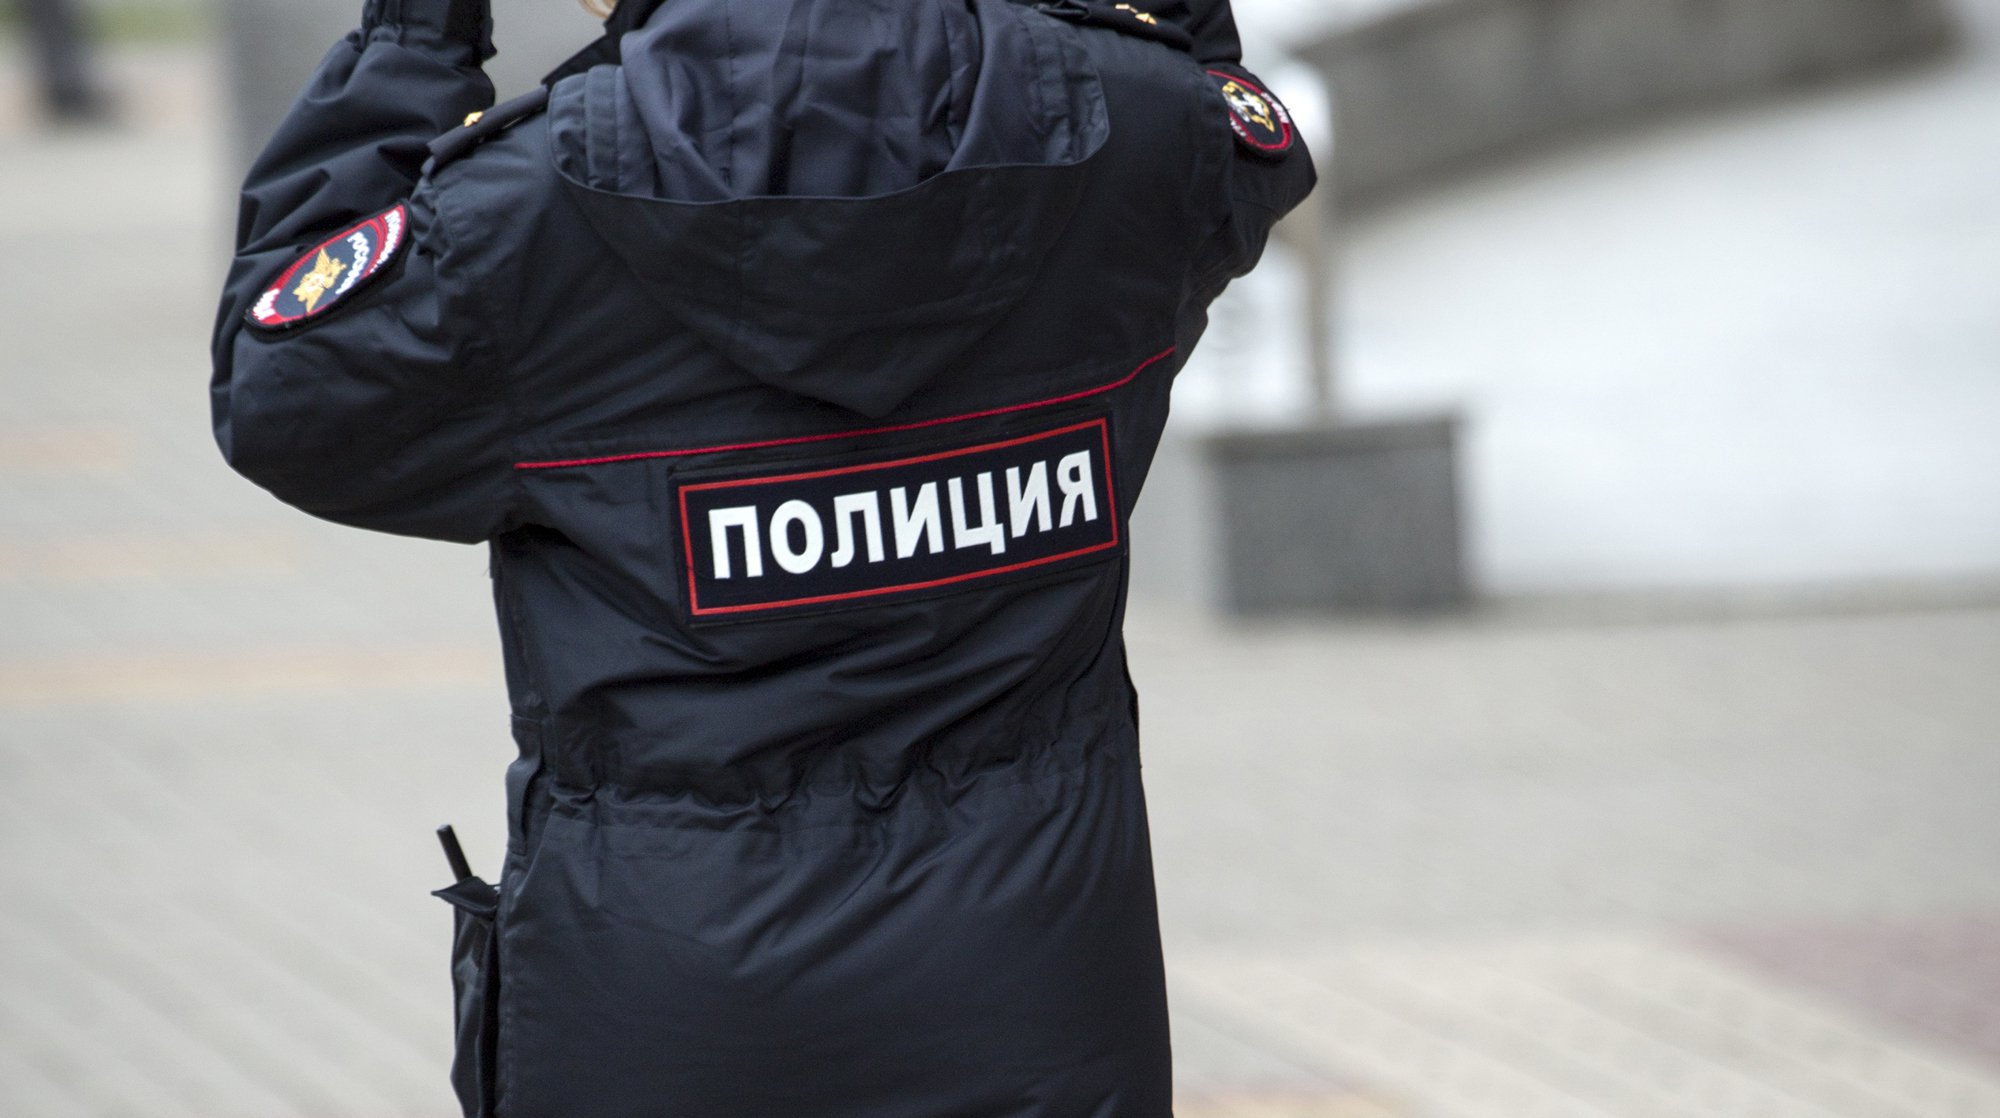 Dailystorm - ФСБ накрыла ячейку «Артподготовки» в Москве